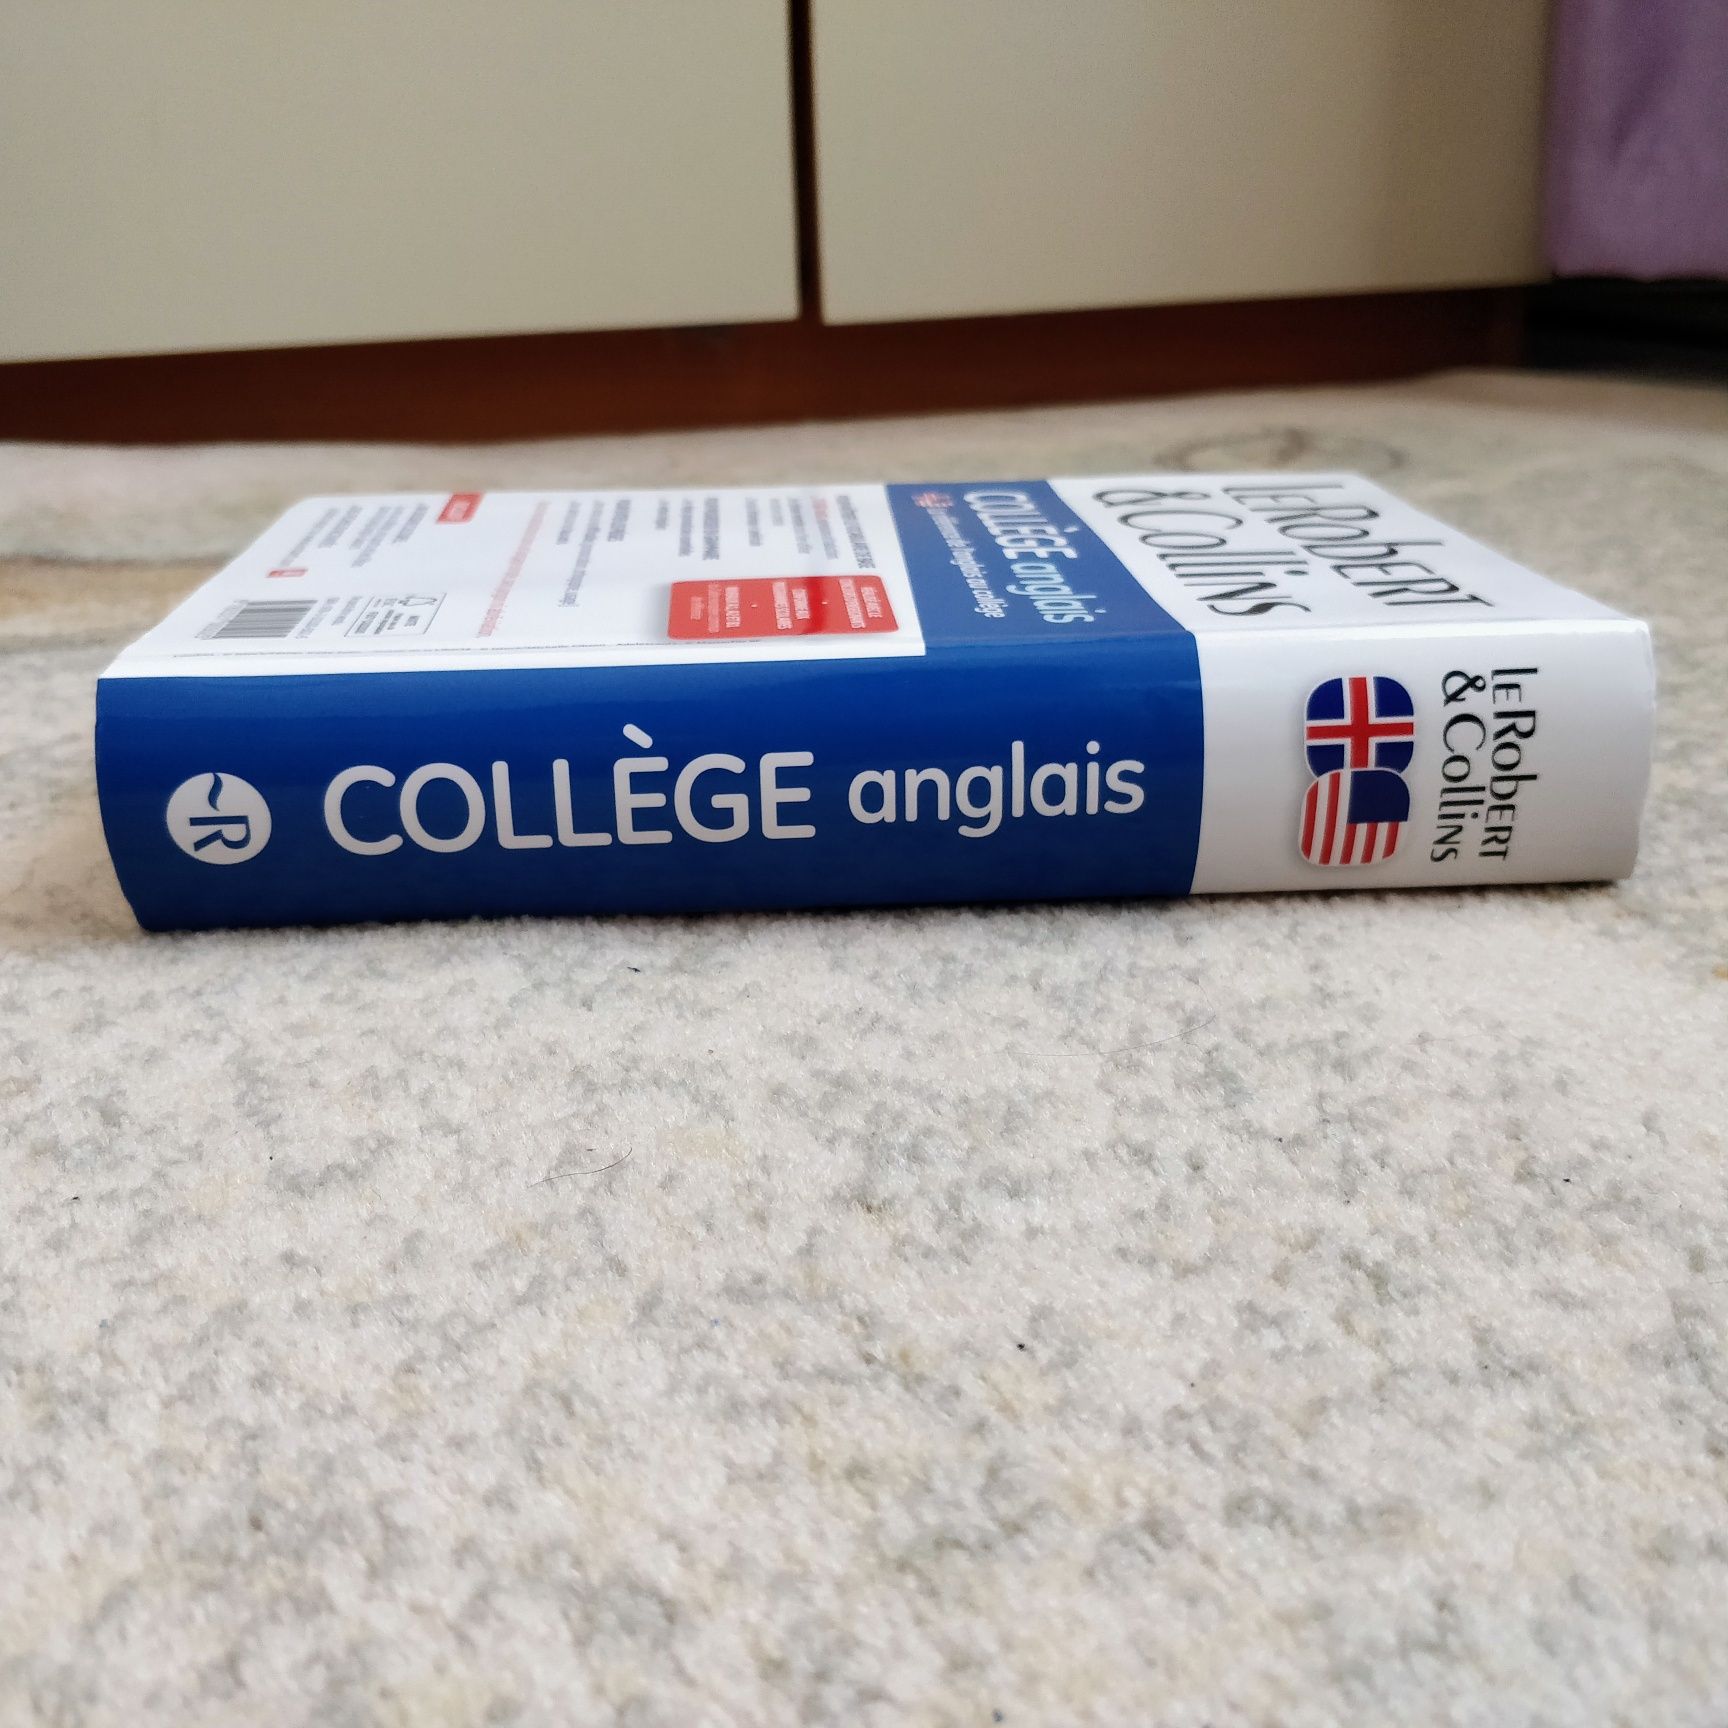 Dicționar Le Robert & Collins francez-englez englez-francez